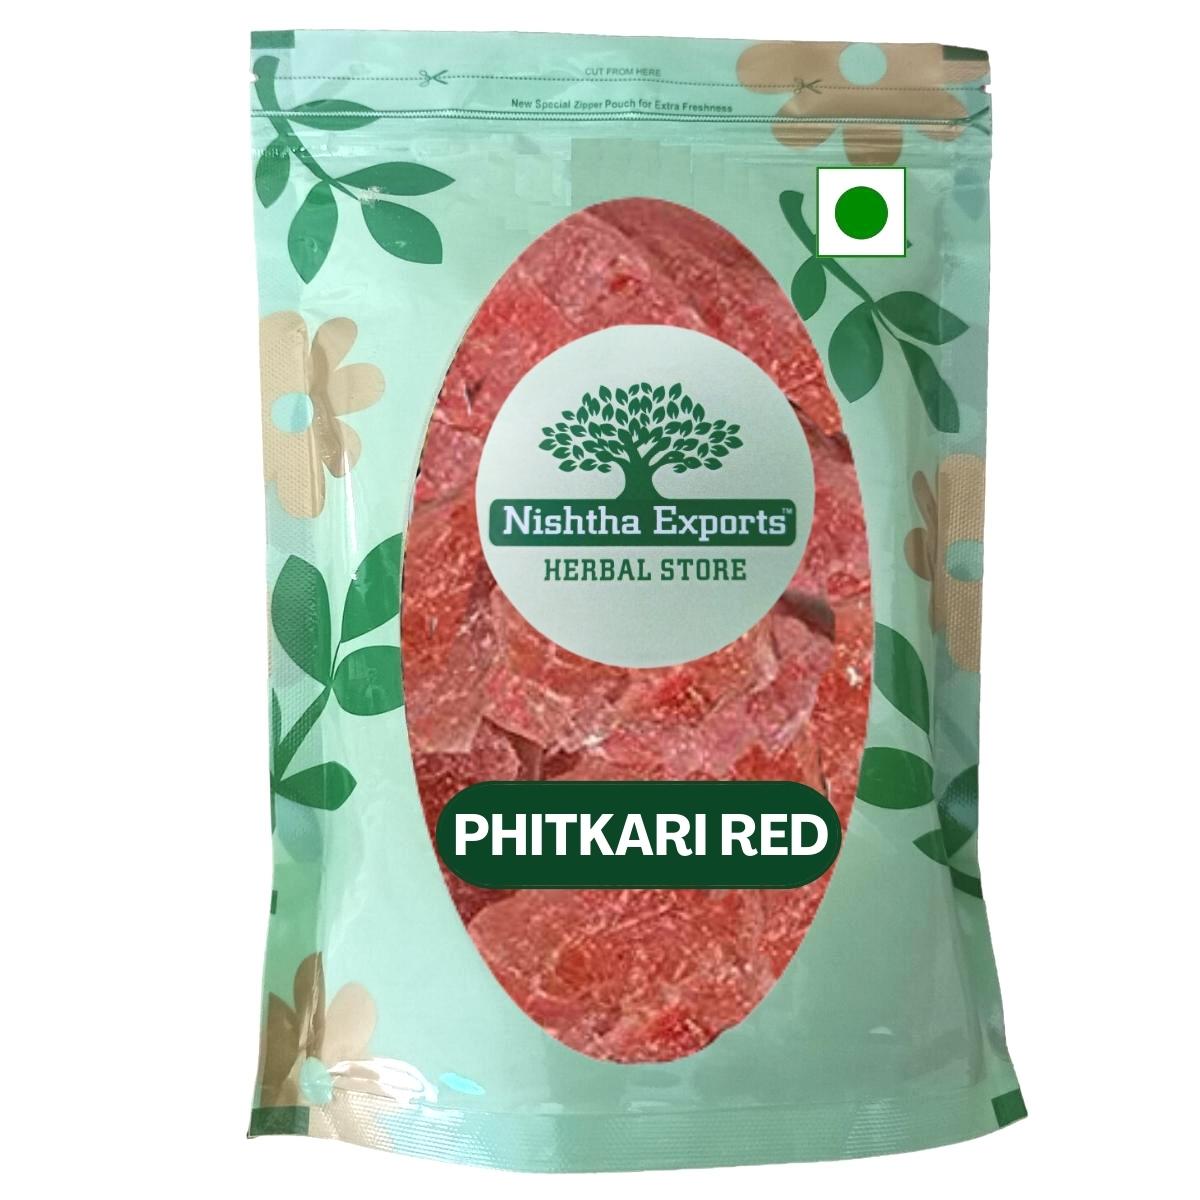 Phitkari Red -Fitkari Lal -Raw Herbs-Jadi Booti-Potash Alum